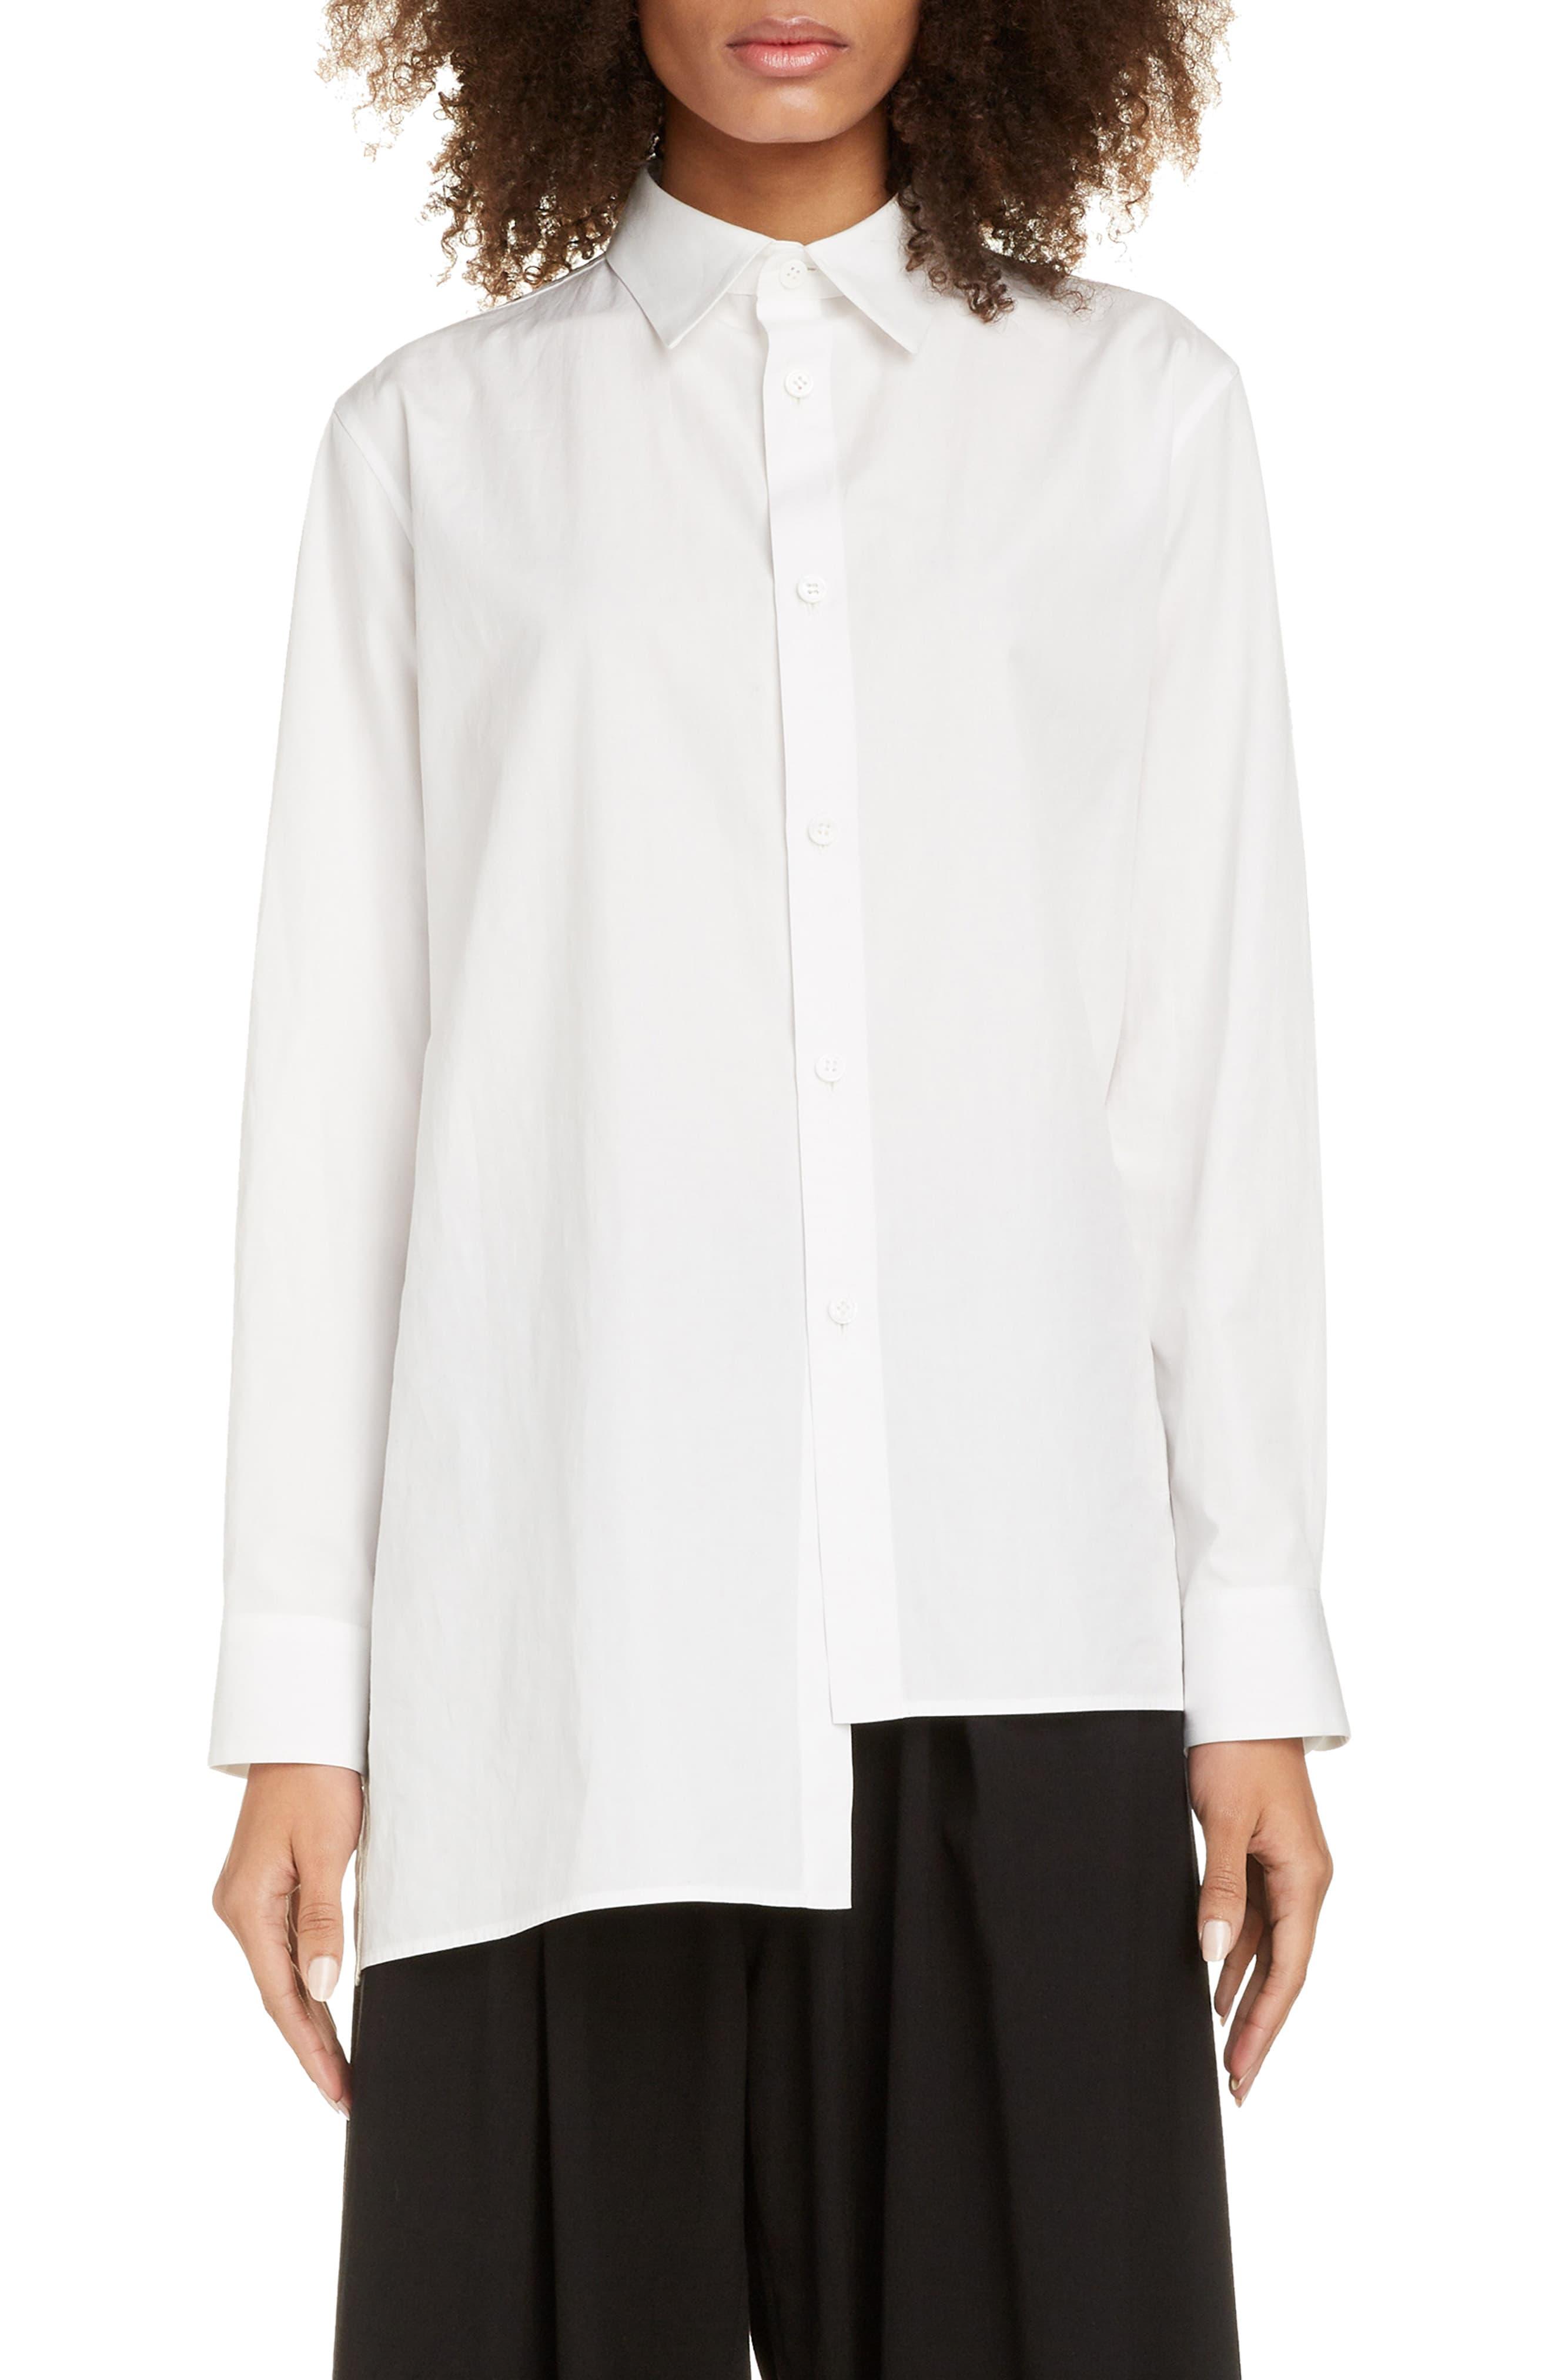 Y's Yohji Yamamoto Long Sleeve Shirt in White - Lyst